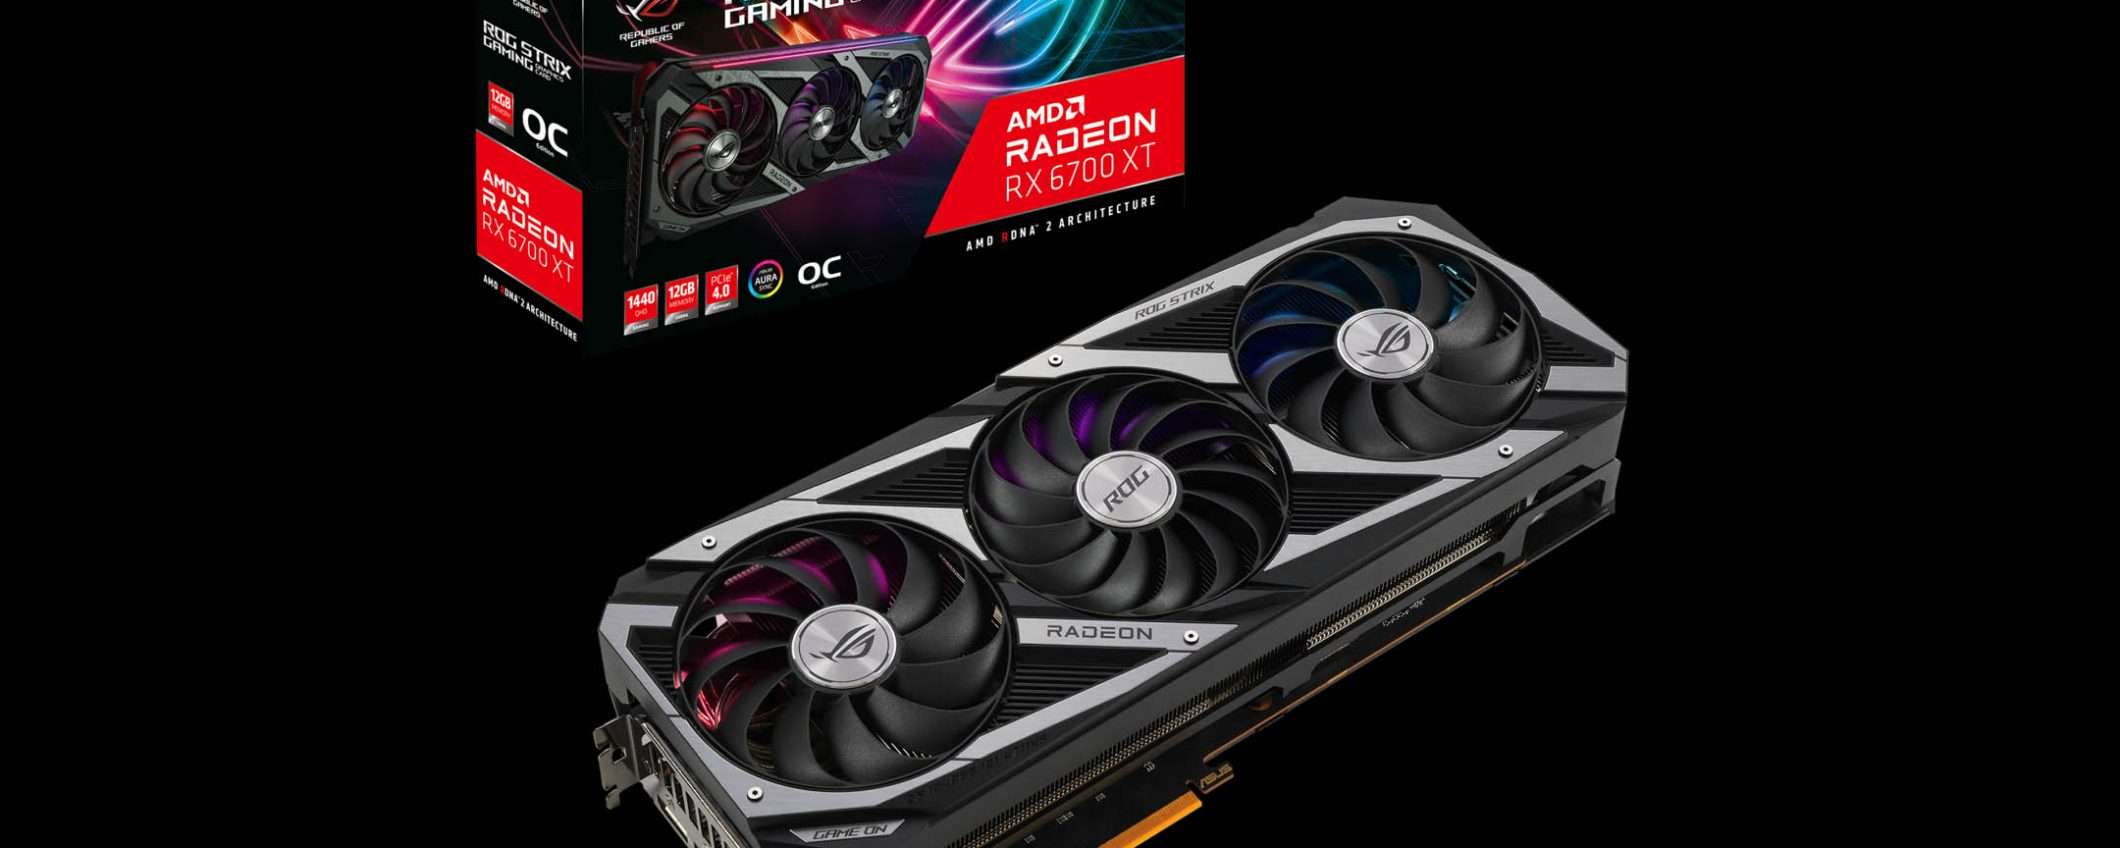 ASUS annuncia tre schede video Radeon RX 6700 XT